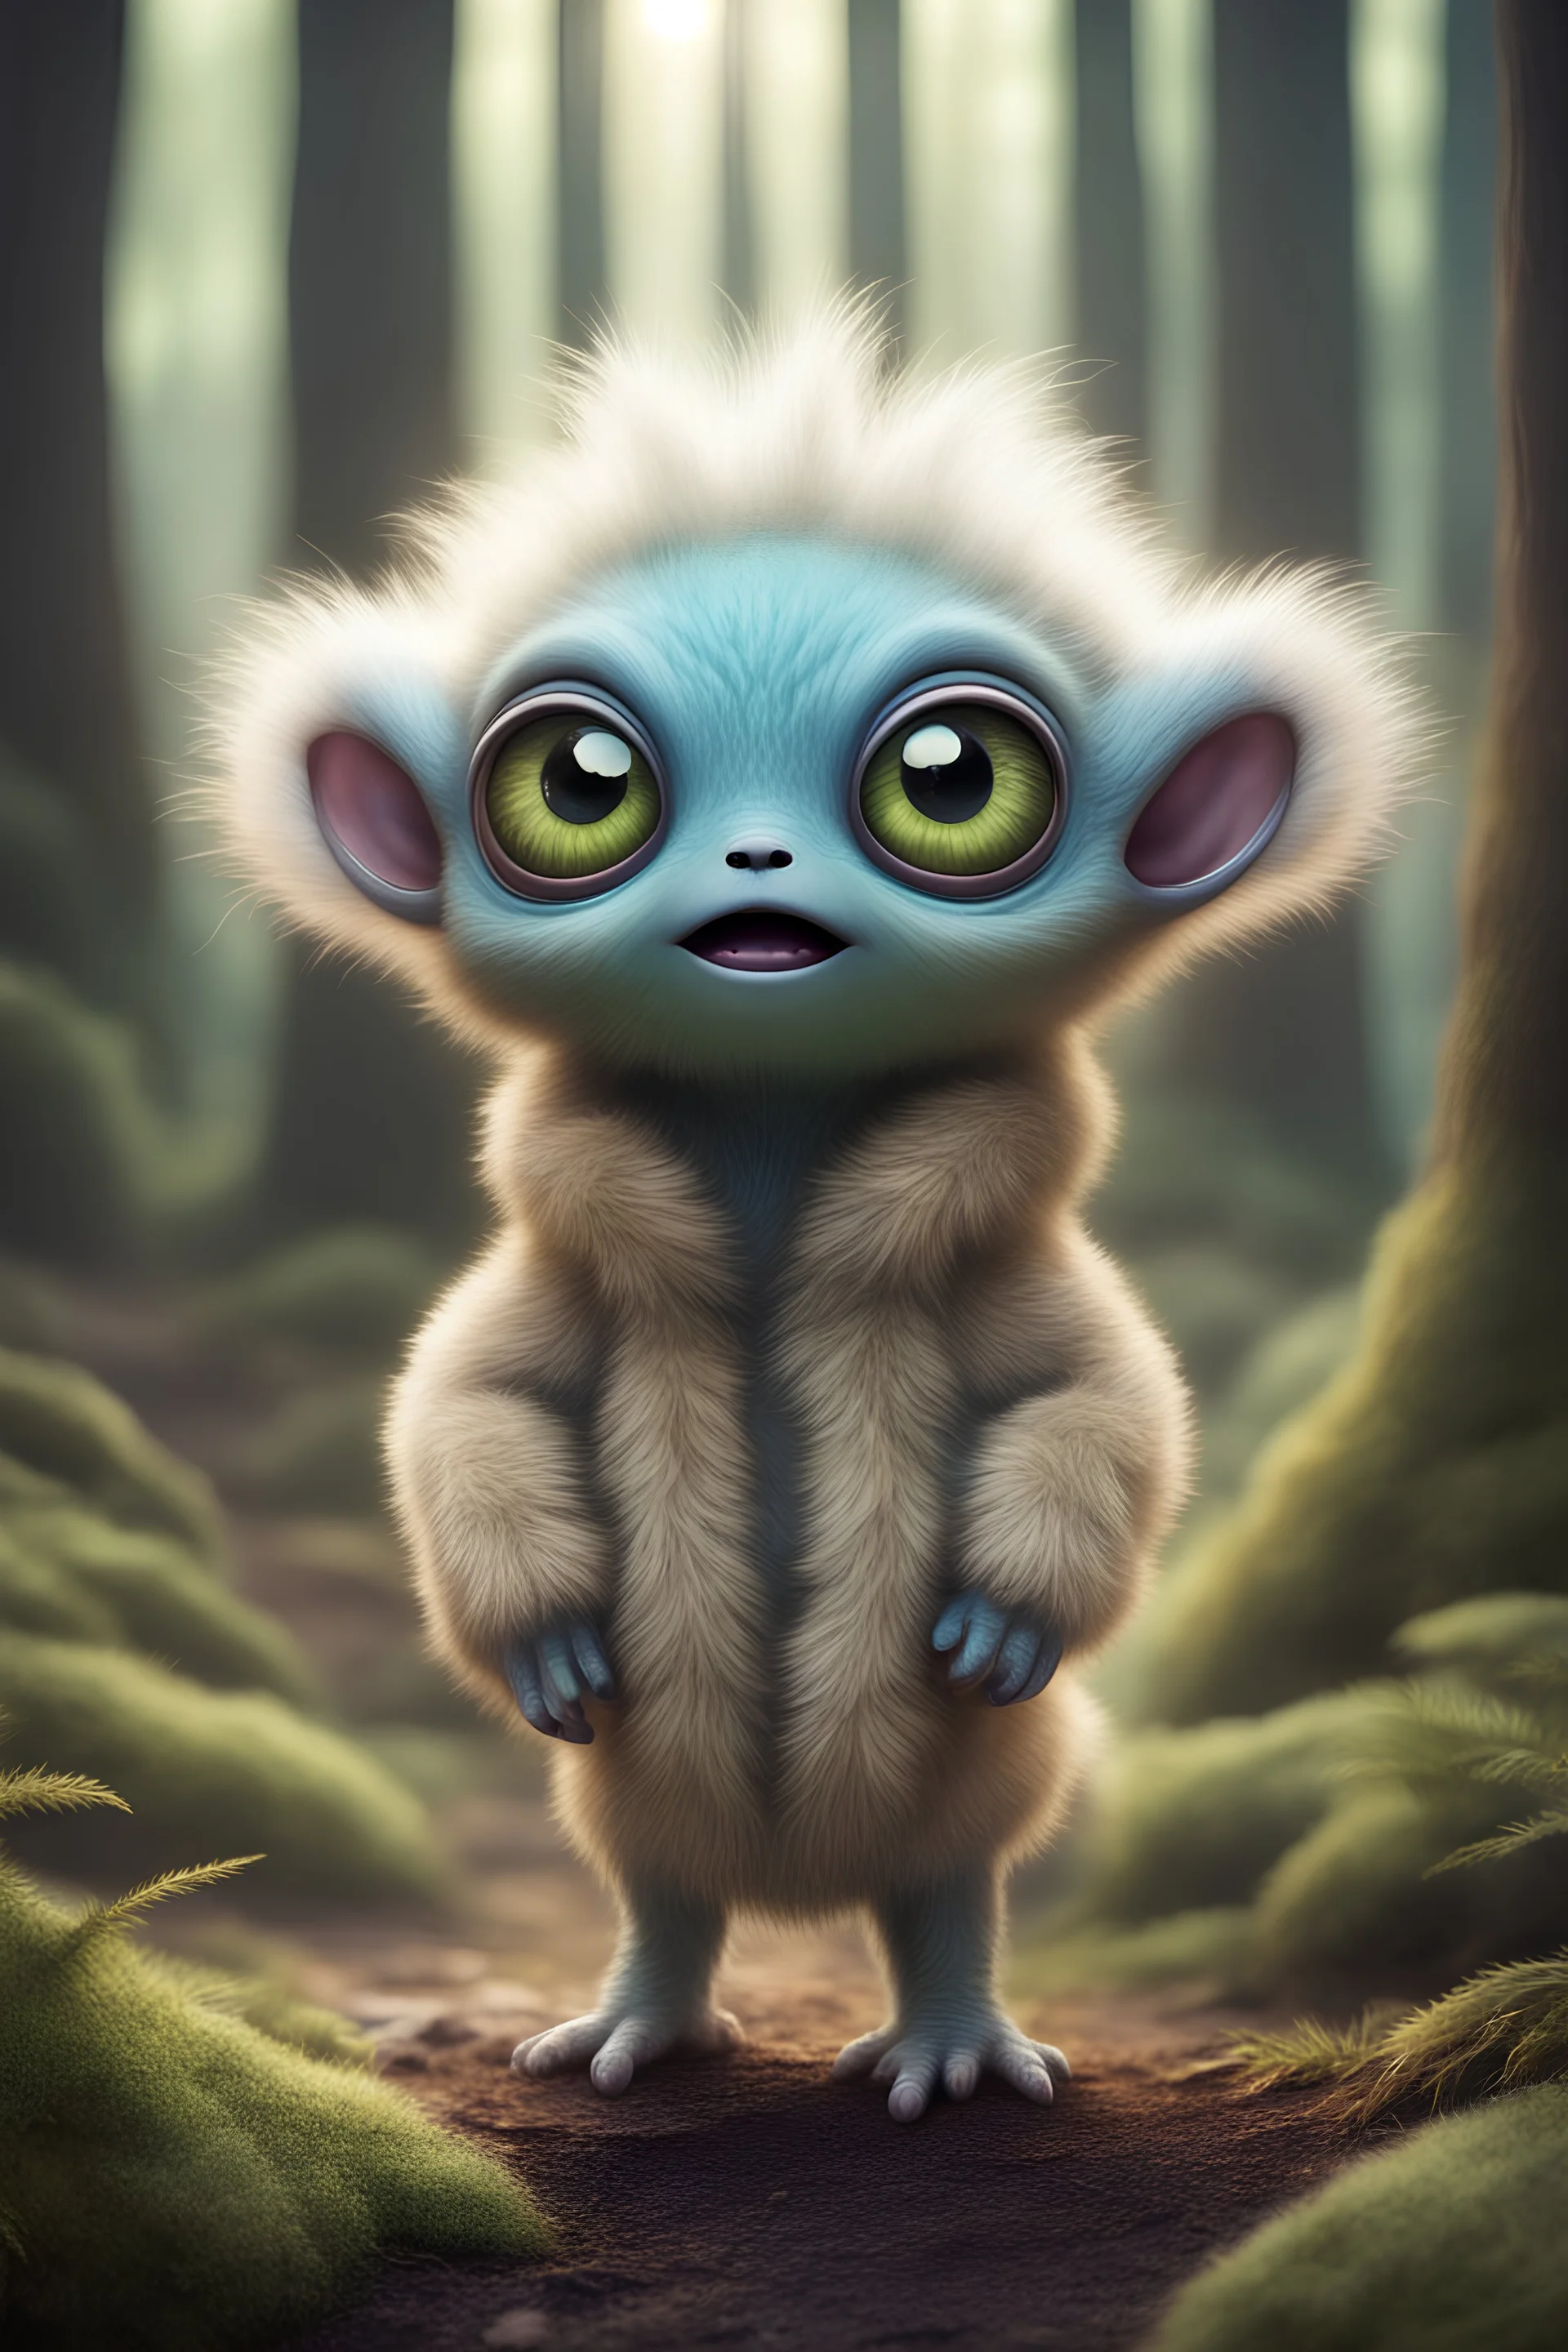 Cute alien creature,with fuzzy coat of fur, cute beedy eyes, forest setting, joyful expression